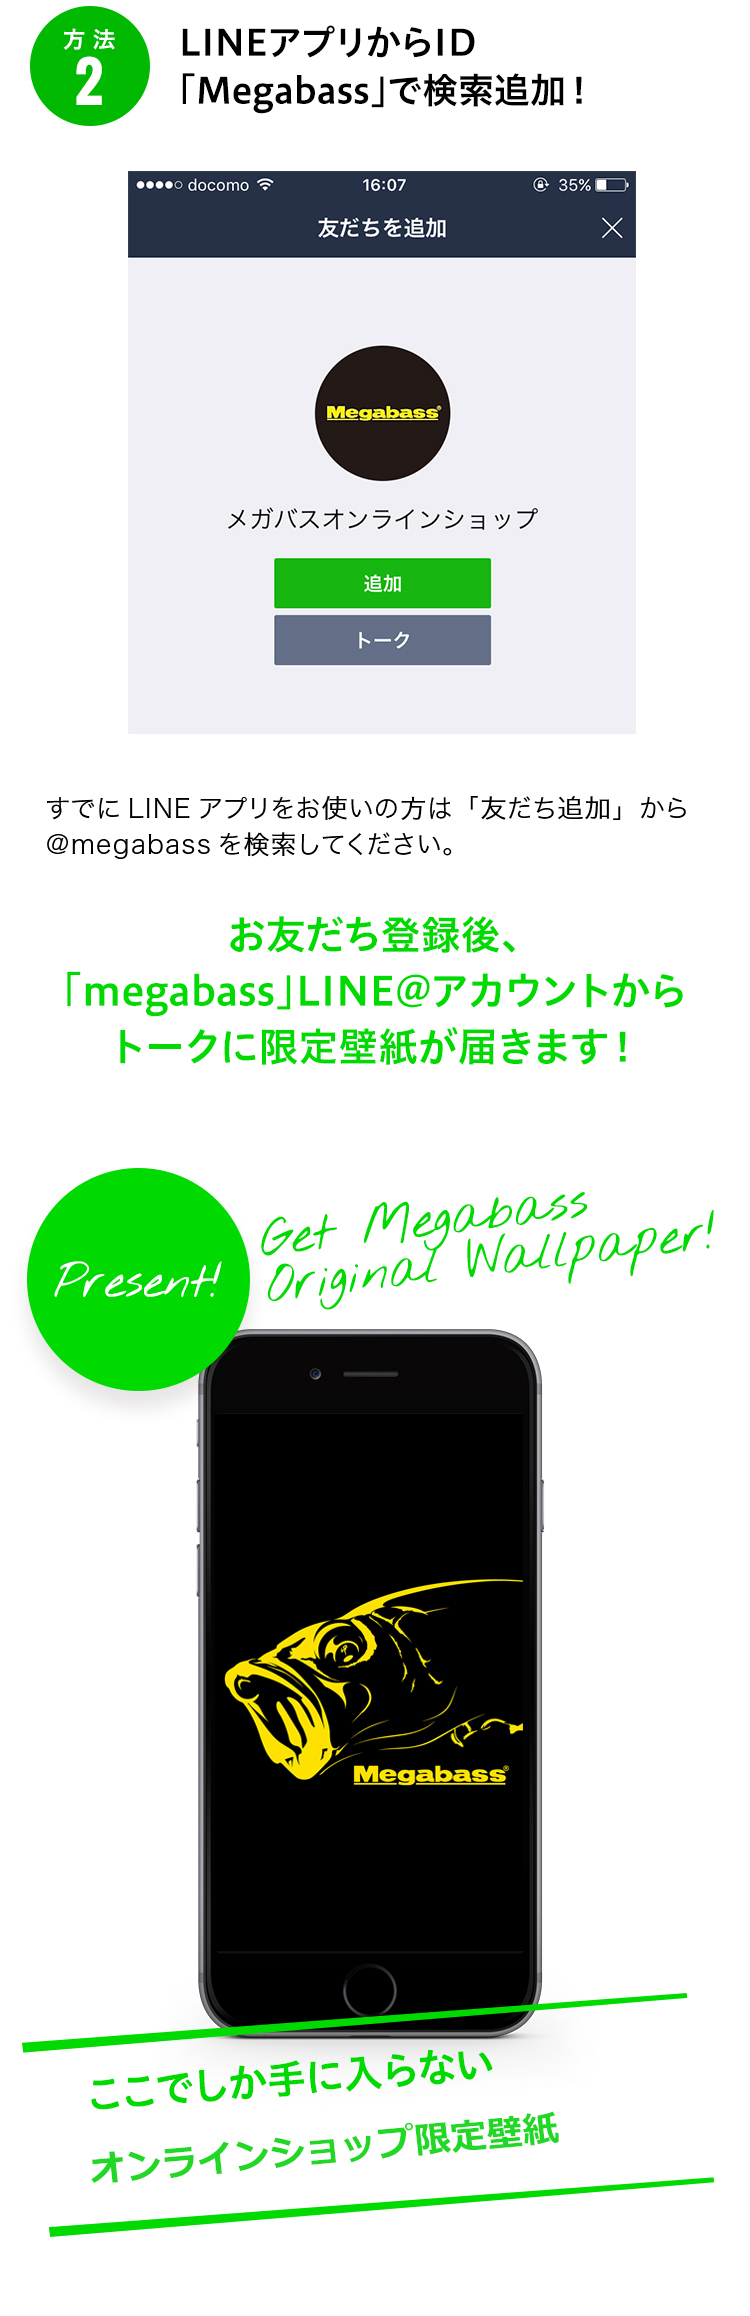 Lineお友達募集 Megabass メガバス オンラインショップ